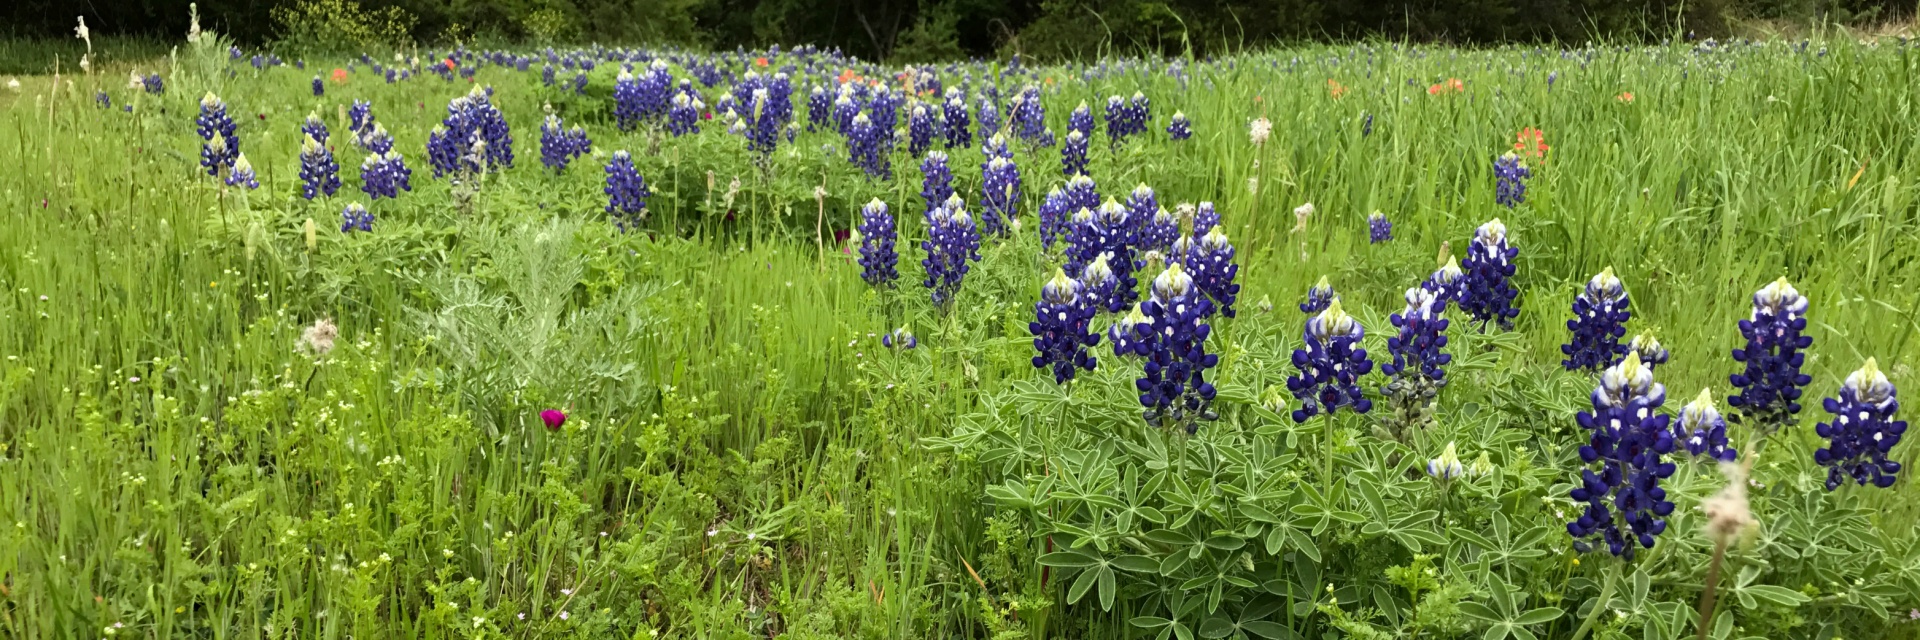 Bluebonnets,  Texas,  Gėlės,  Texas Bluebonnets, Nemokamos Nuotraukos,  Nemokama Licenzija